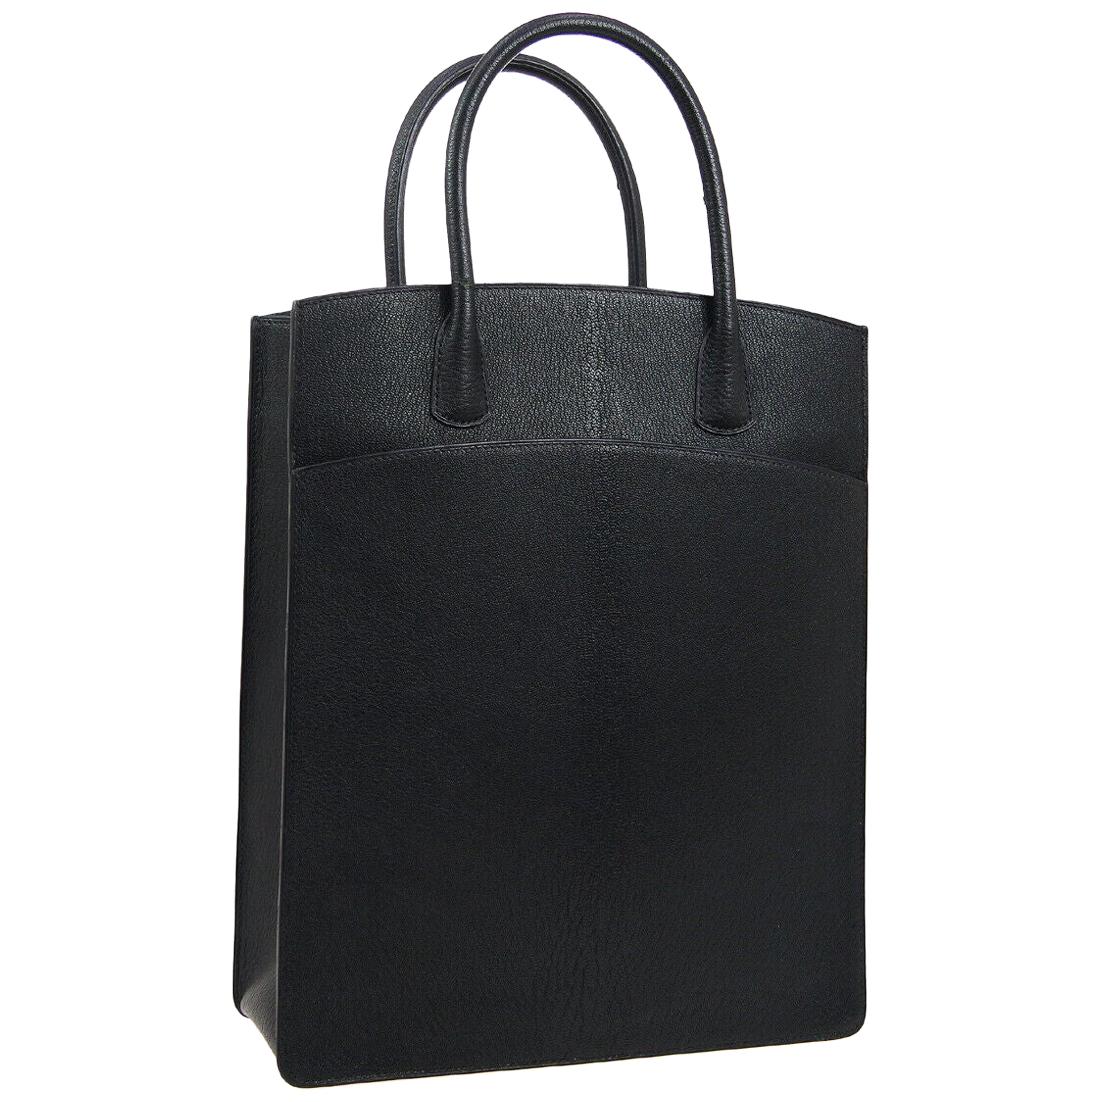 Hermes Black Leather Top Handle Satchel Carryall Travel Tote Bag